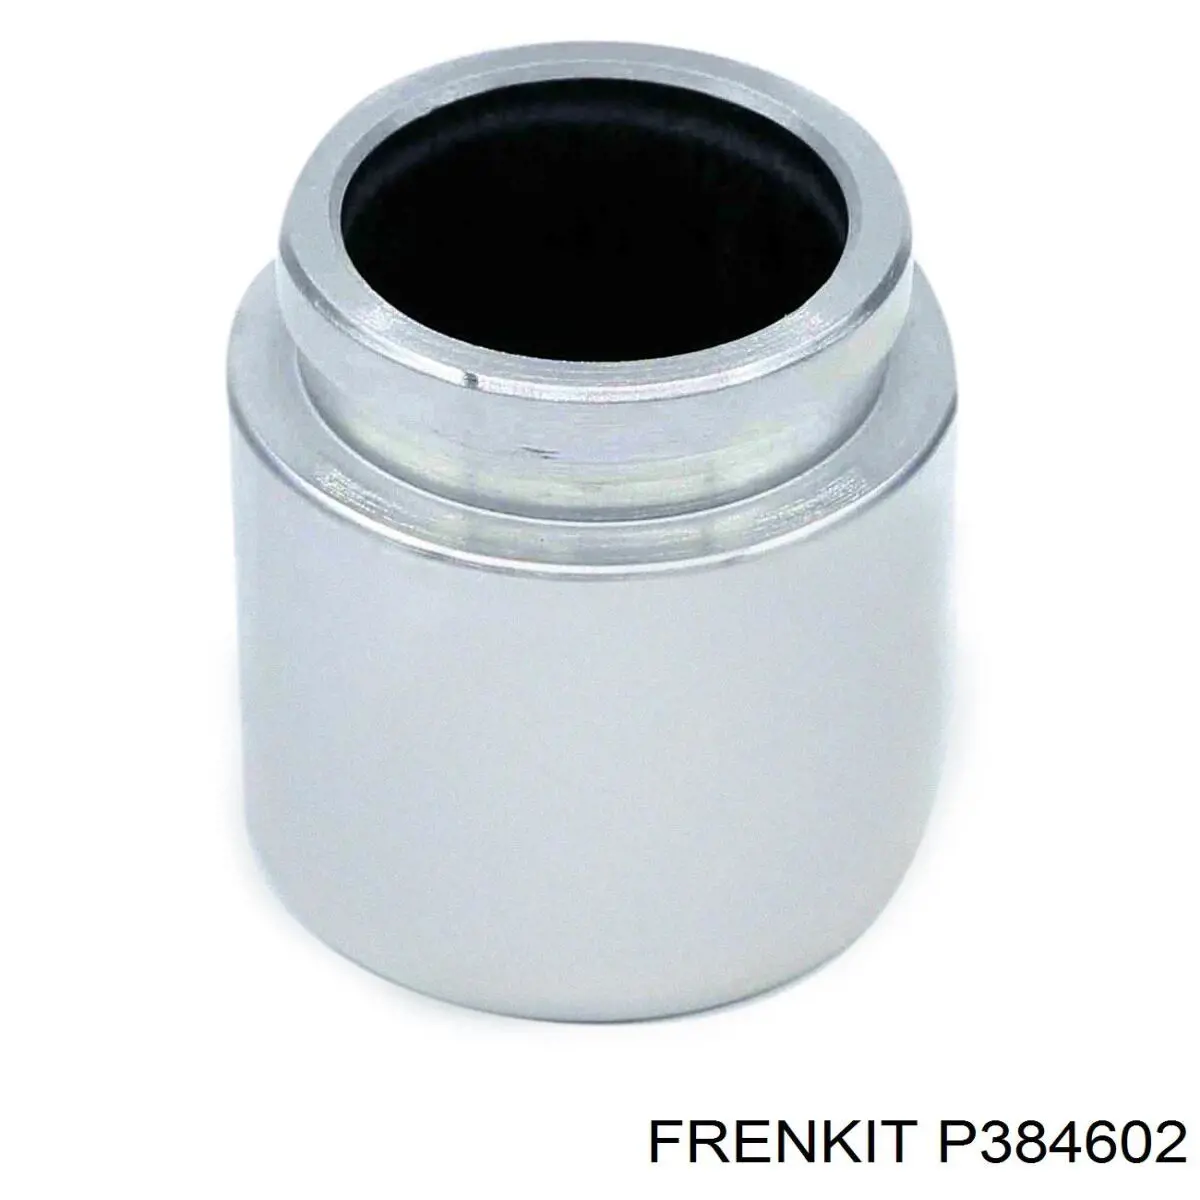 P384602 Frenkit поршень суппорта тормозного заднего